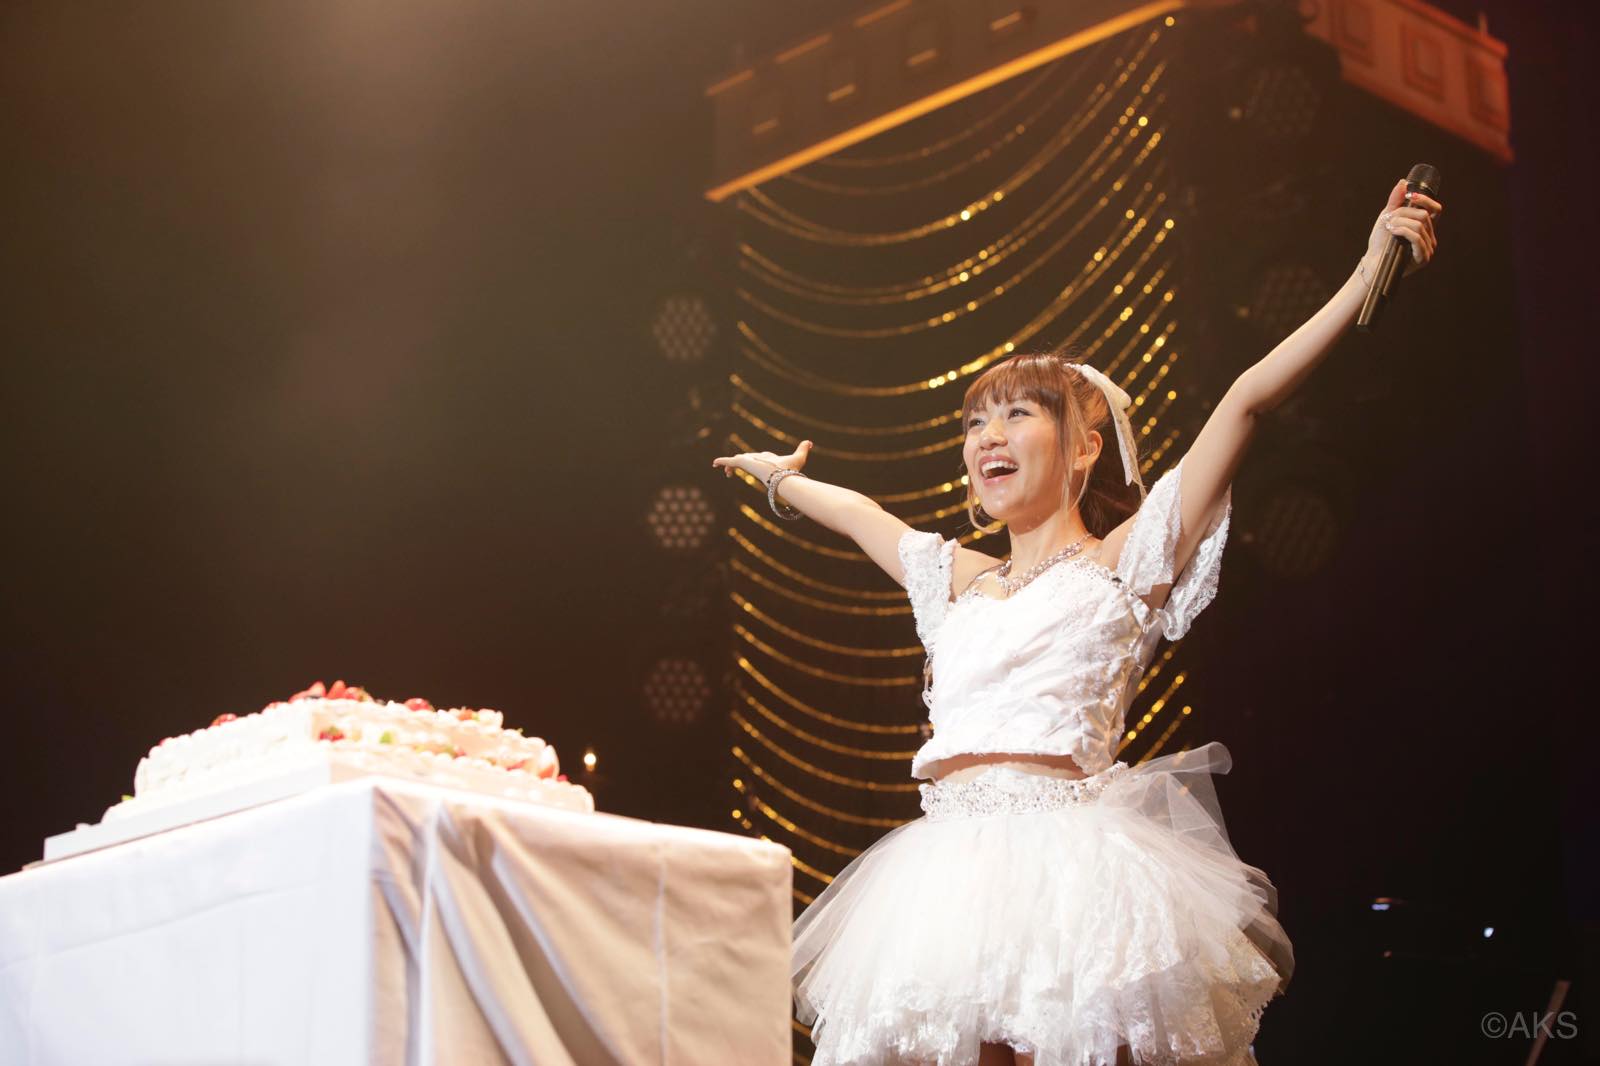 Takamina Birthday Live: Minami Takahashi Reveals New Song & Vows to Take the #1 Spot in Last Senbatsu Sousenkyo!